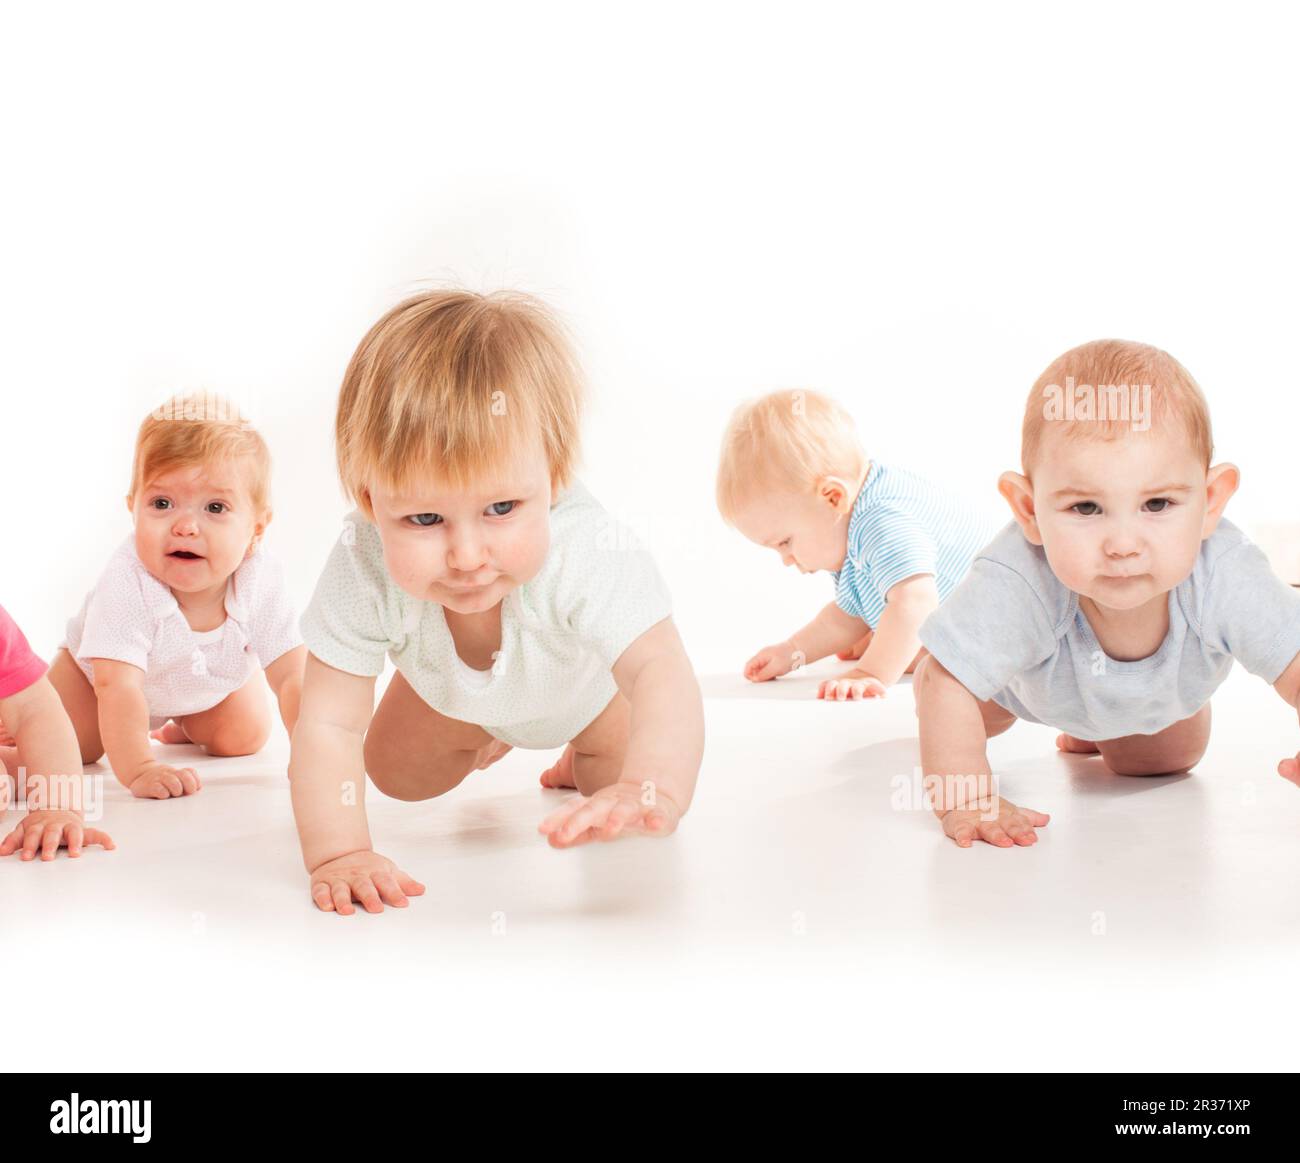 Infants crawling race Stock Photo